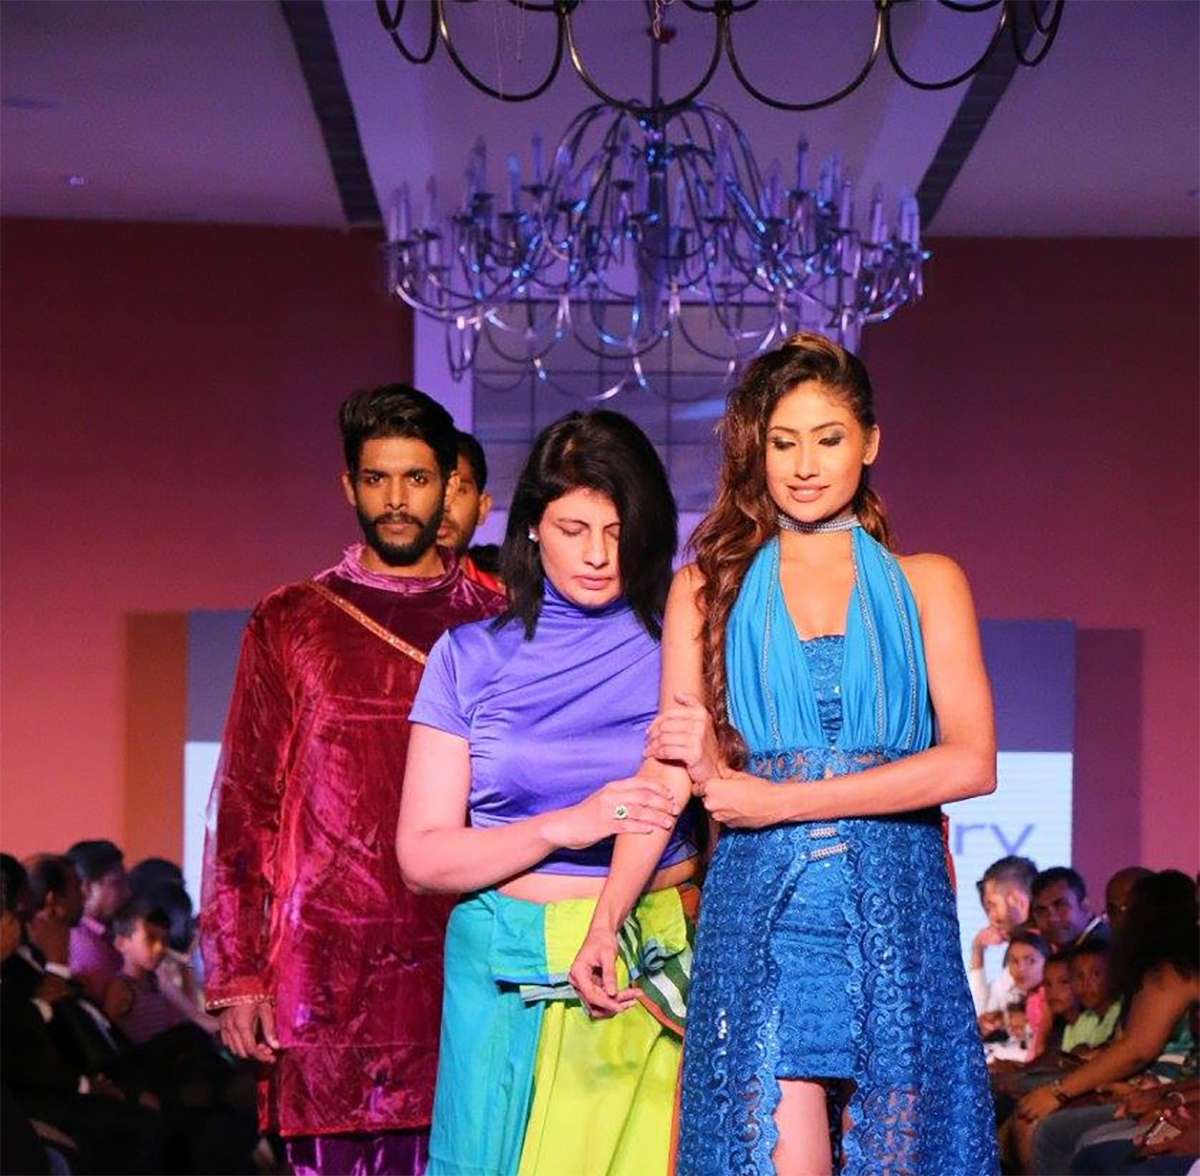 Ashcharya Peiris is Sri Lanka's first visually impaired fashion designer